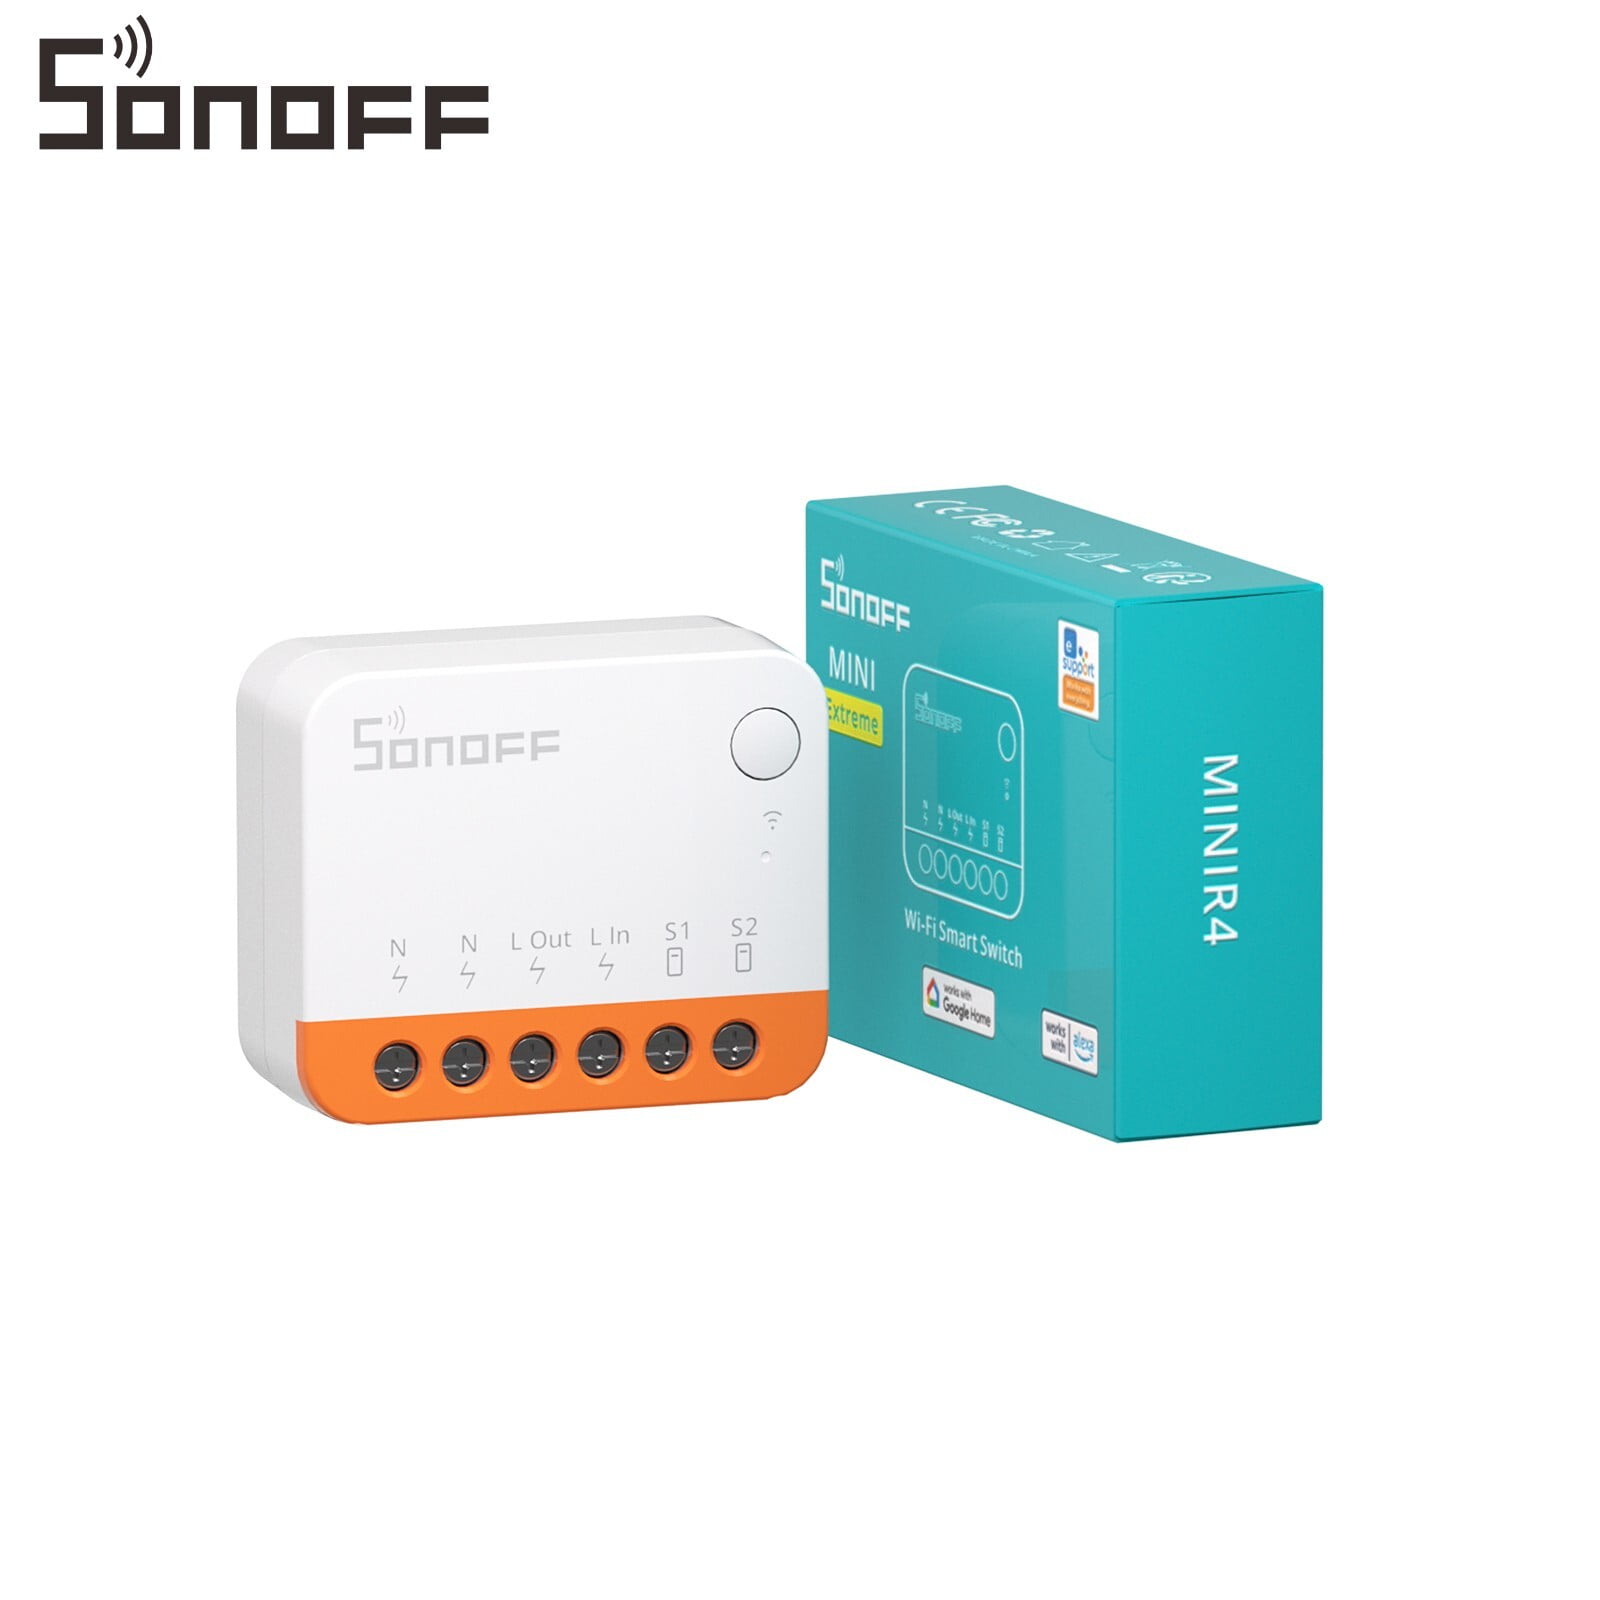 SONOFF MINI WiFi Smart Switch Timer Module 10A 2 Way Support Switch APP /  LAN / Control remoto por voz DIY hogar inteligente - RaspBerrer - Raspberry  & Arduino Compatible Components